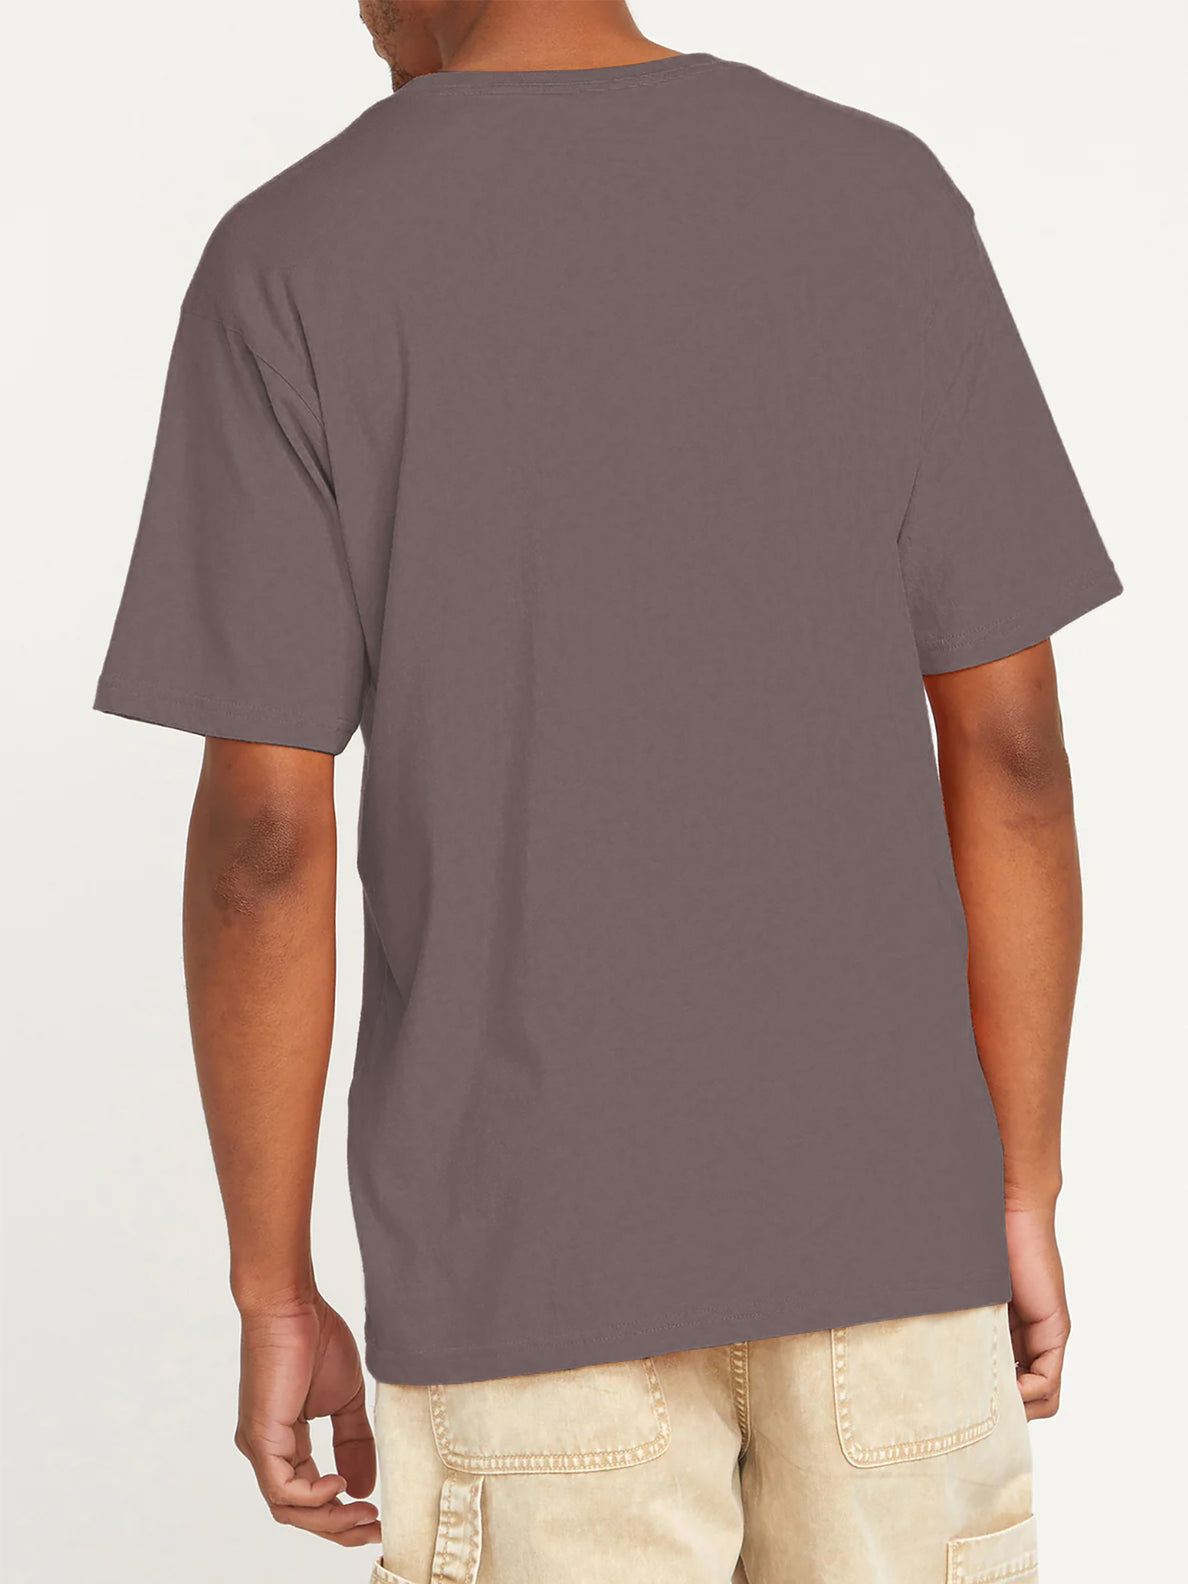 Pistol Basic Short Sleeve Tee Shirt - Doeskin